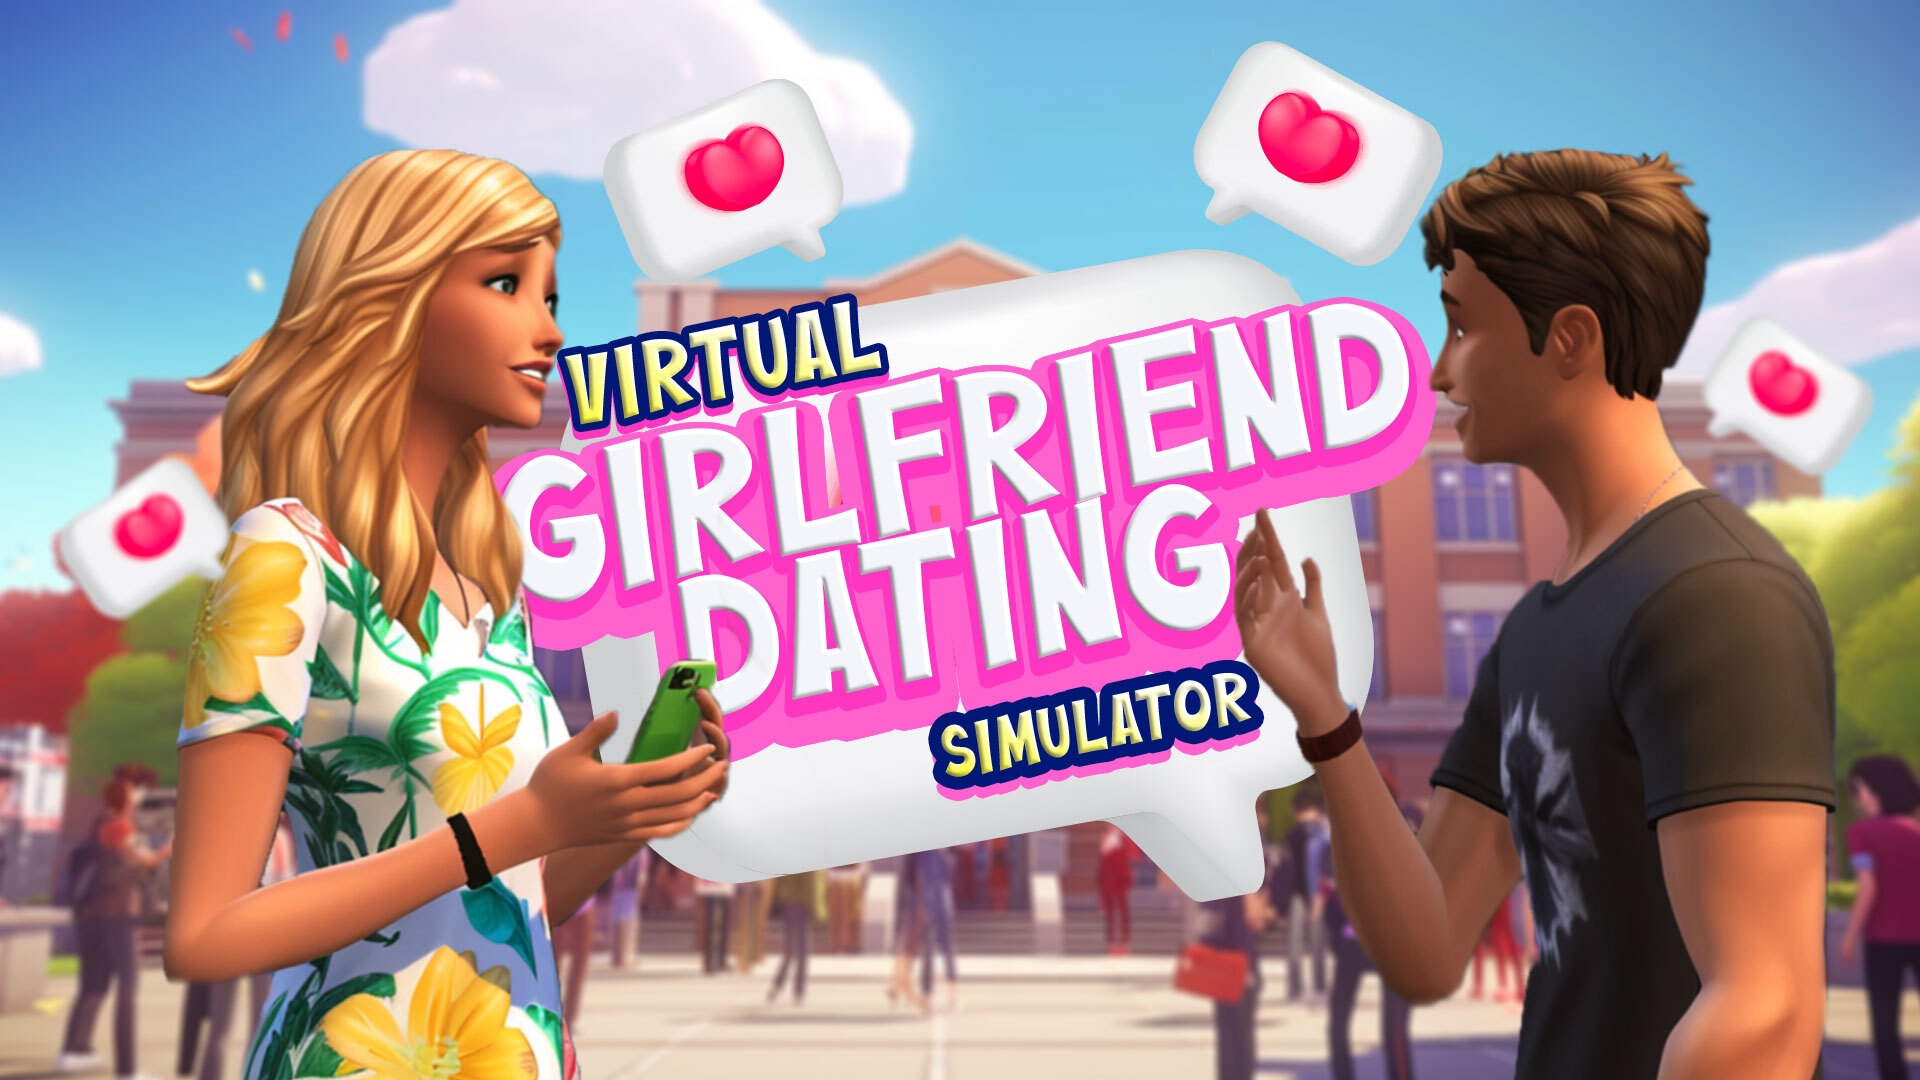 Virtual Girlfriend Dating Simulator